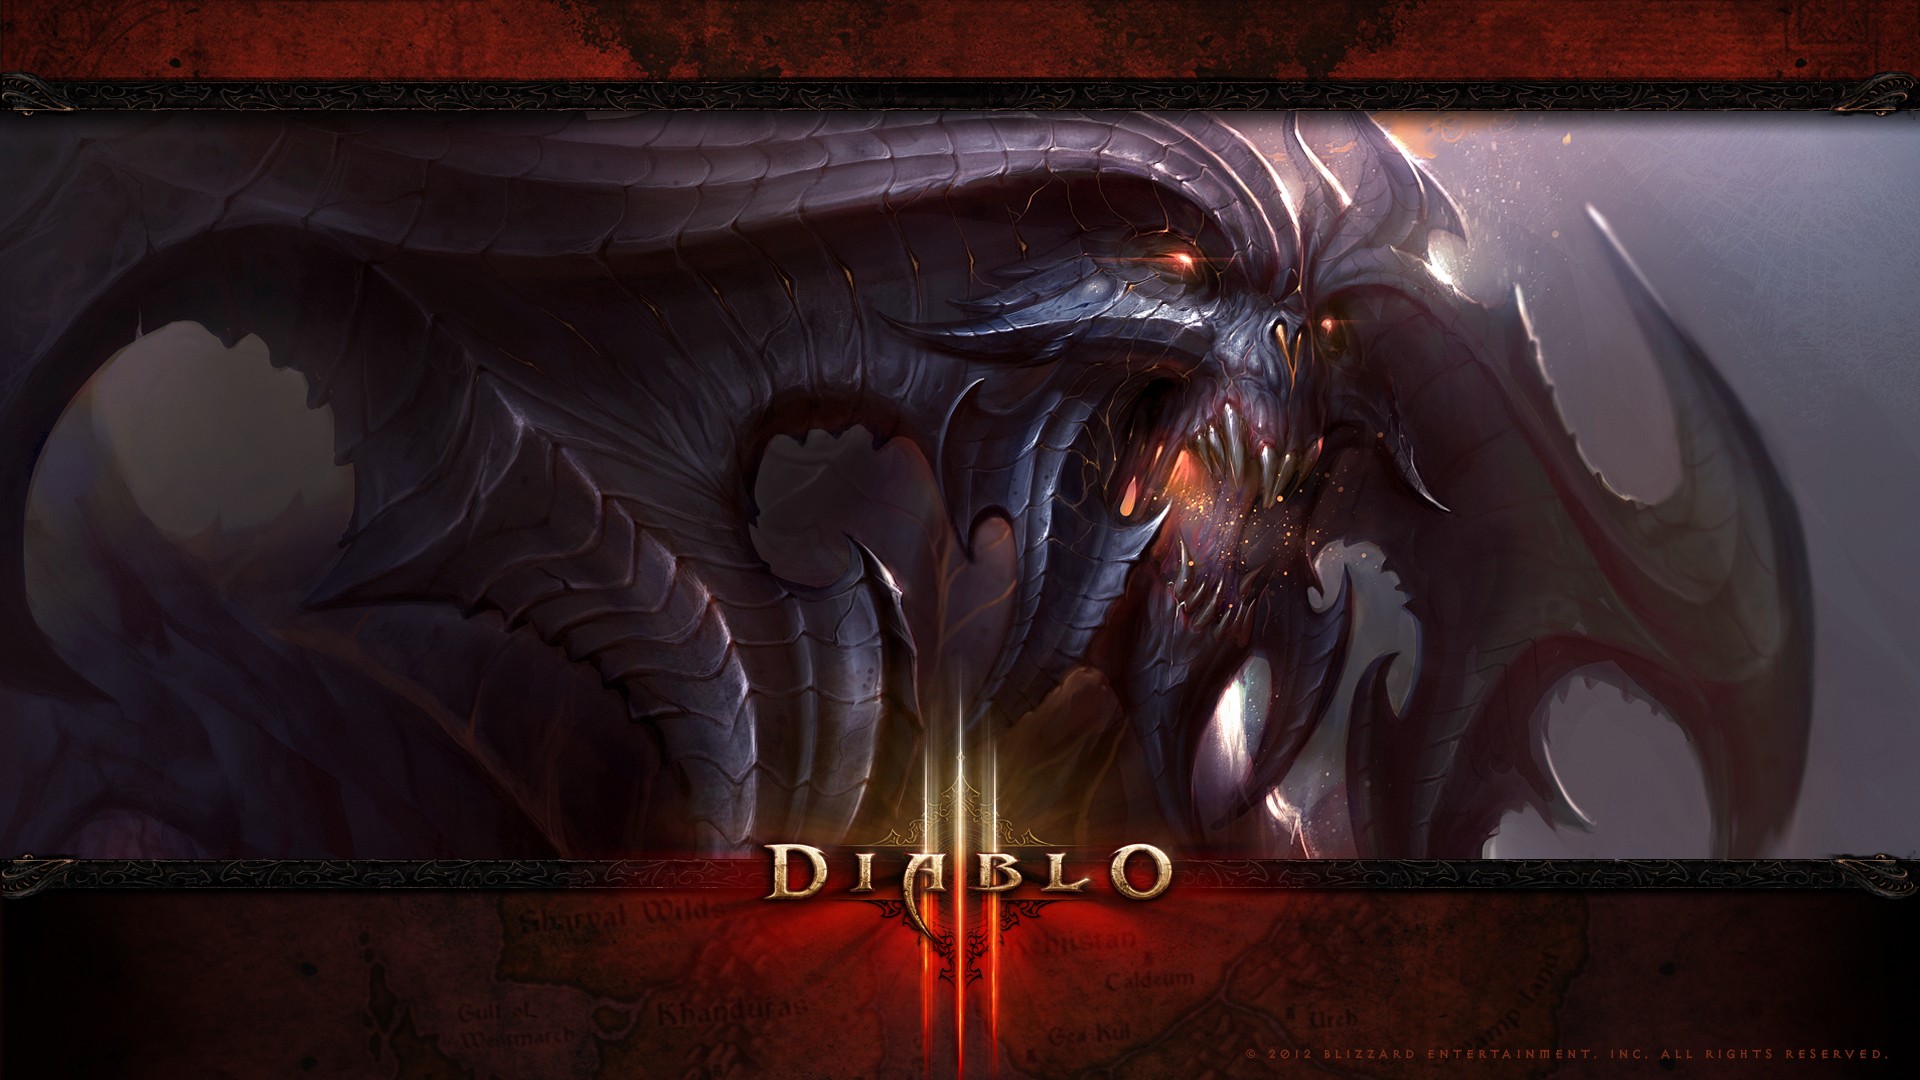 General 1920x1080 Blizzard Entertainment Diablo III video games PC gaming video game art fantasy art creature 2012 (Year)